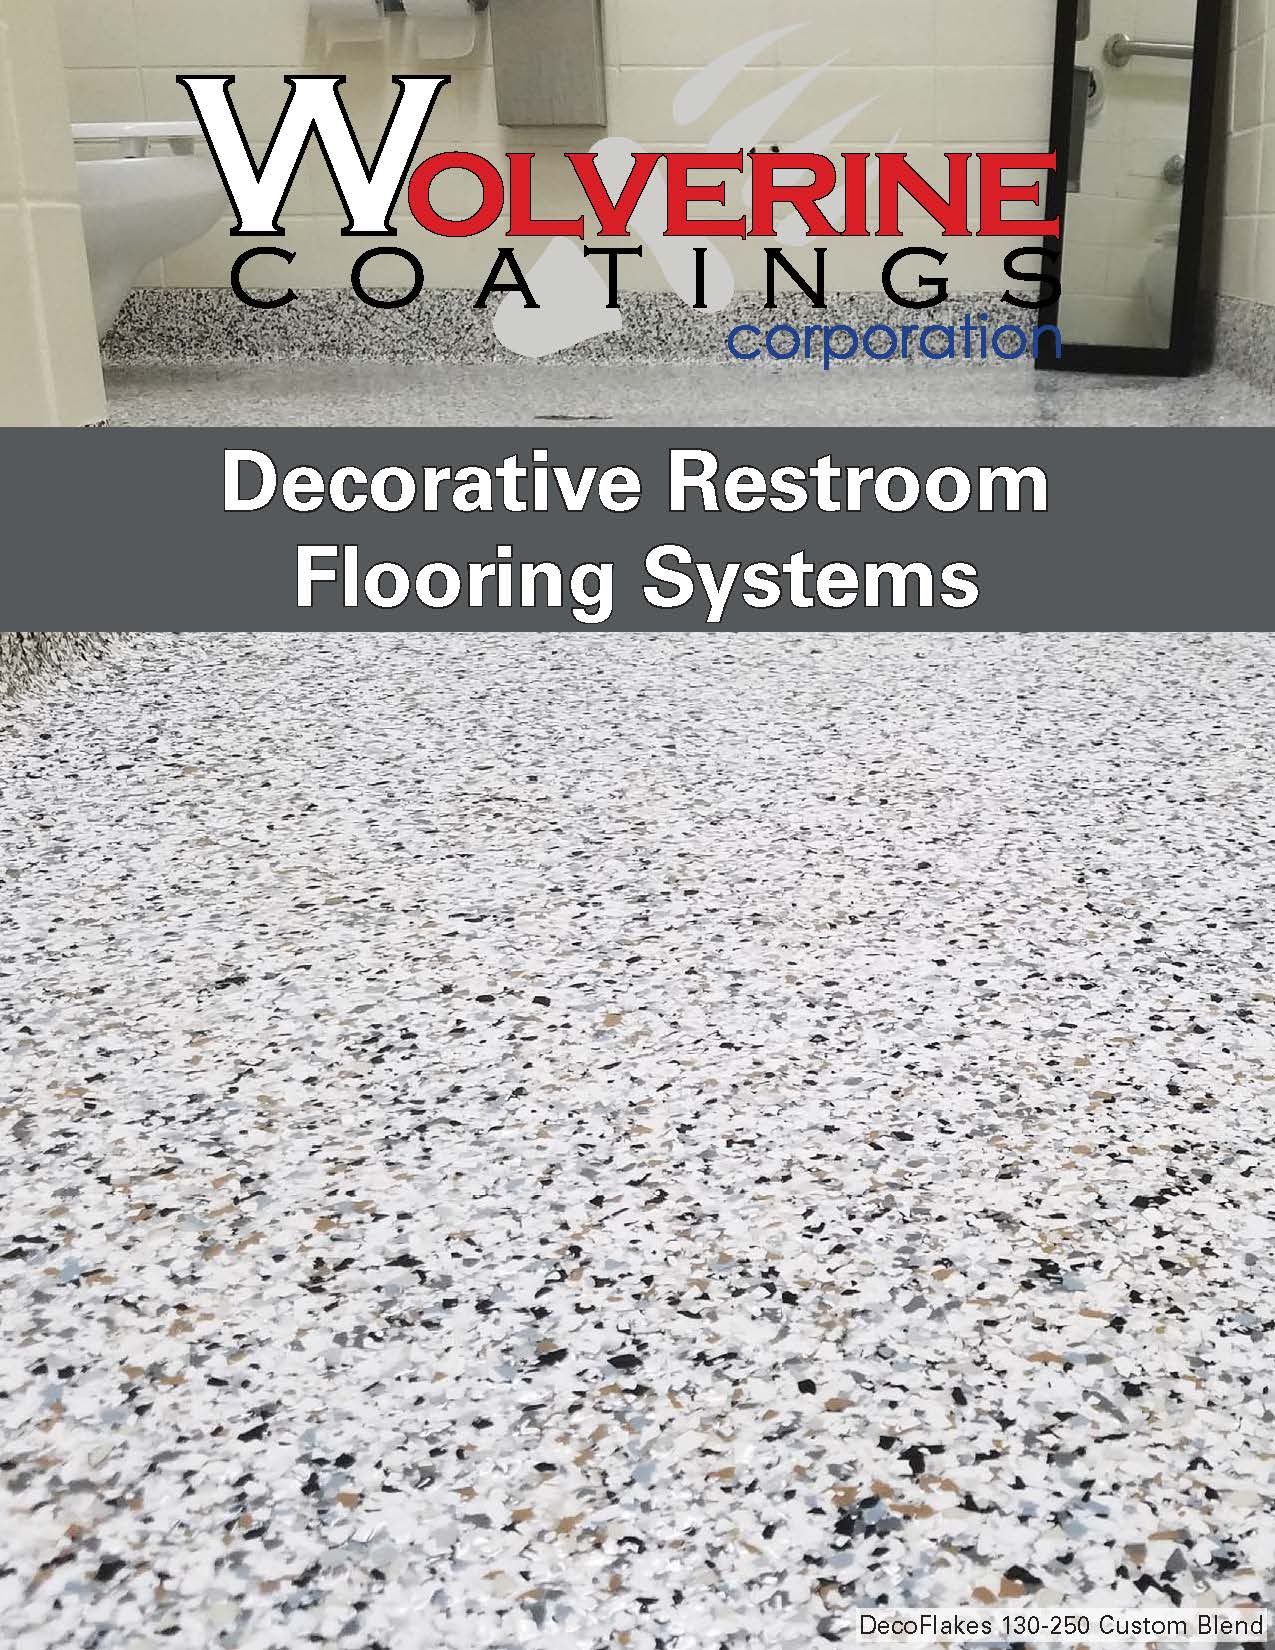 Decorative Restroom Flooring Systems - General Product Brochures - Wolverine Coatings Corporation: Coatings Manufacturer, Spartanburg, SC